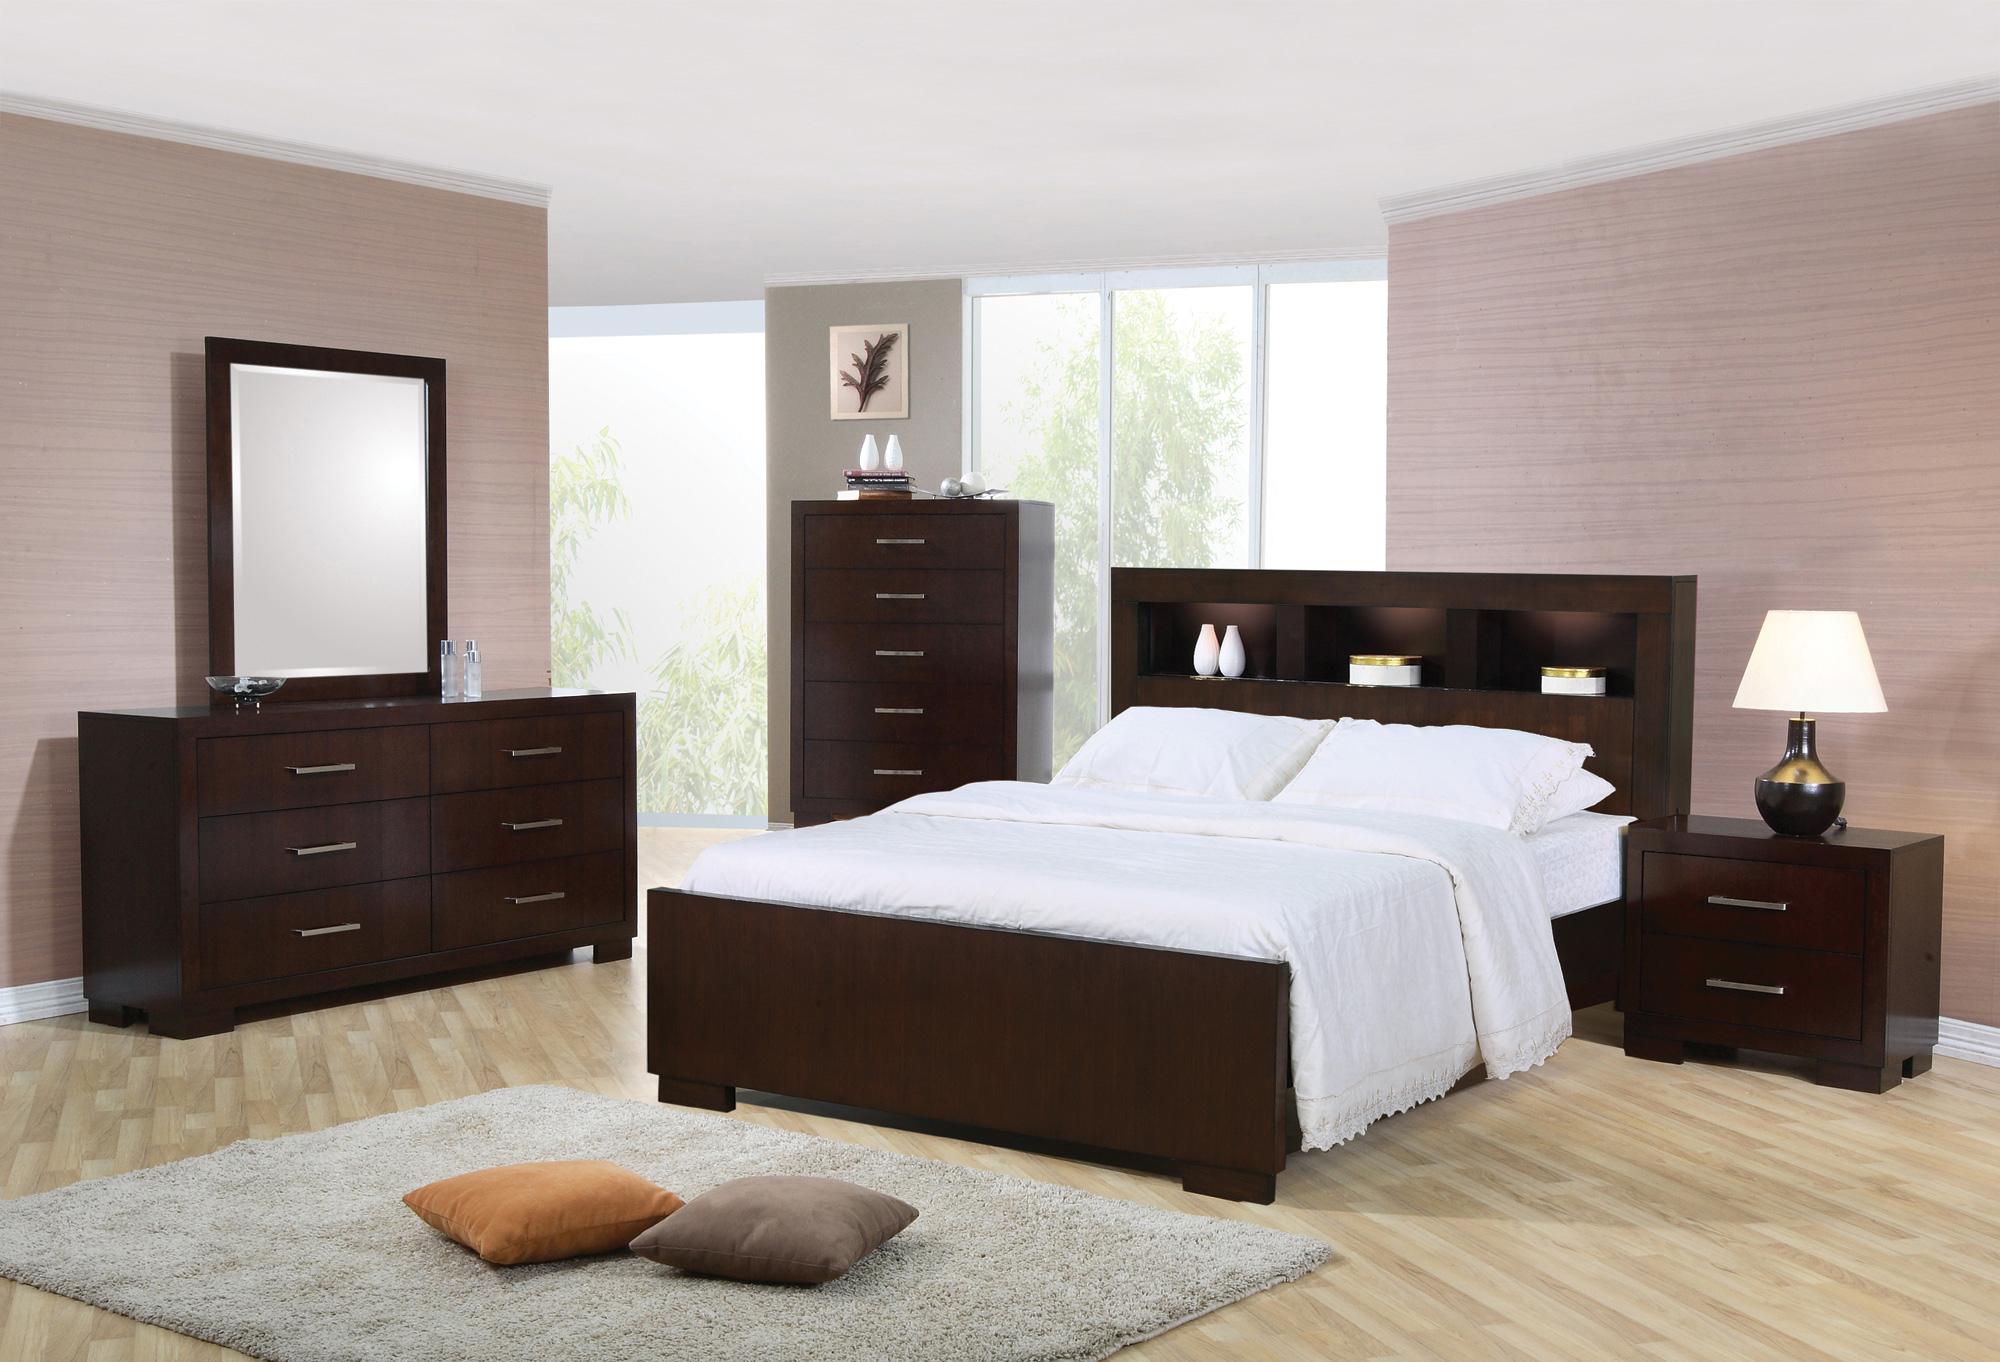 jordan's bedroom furniture set